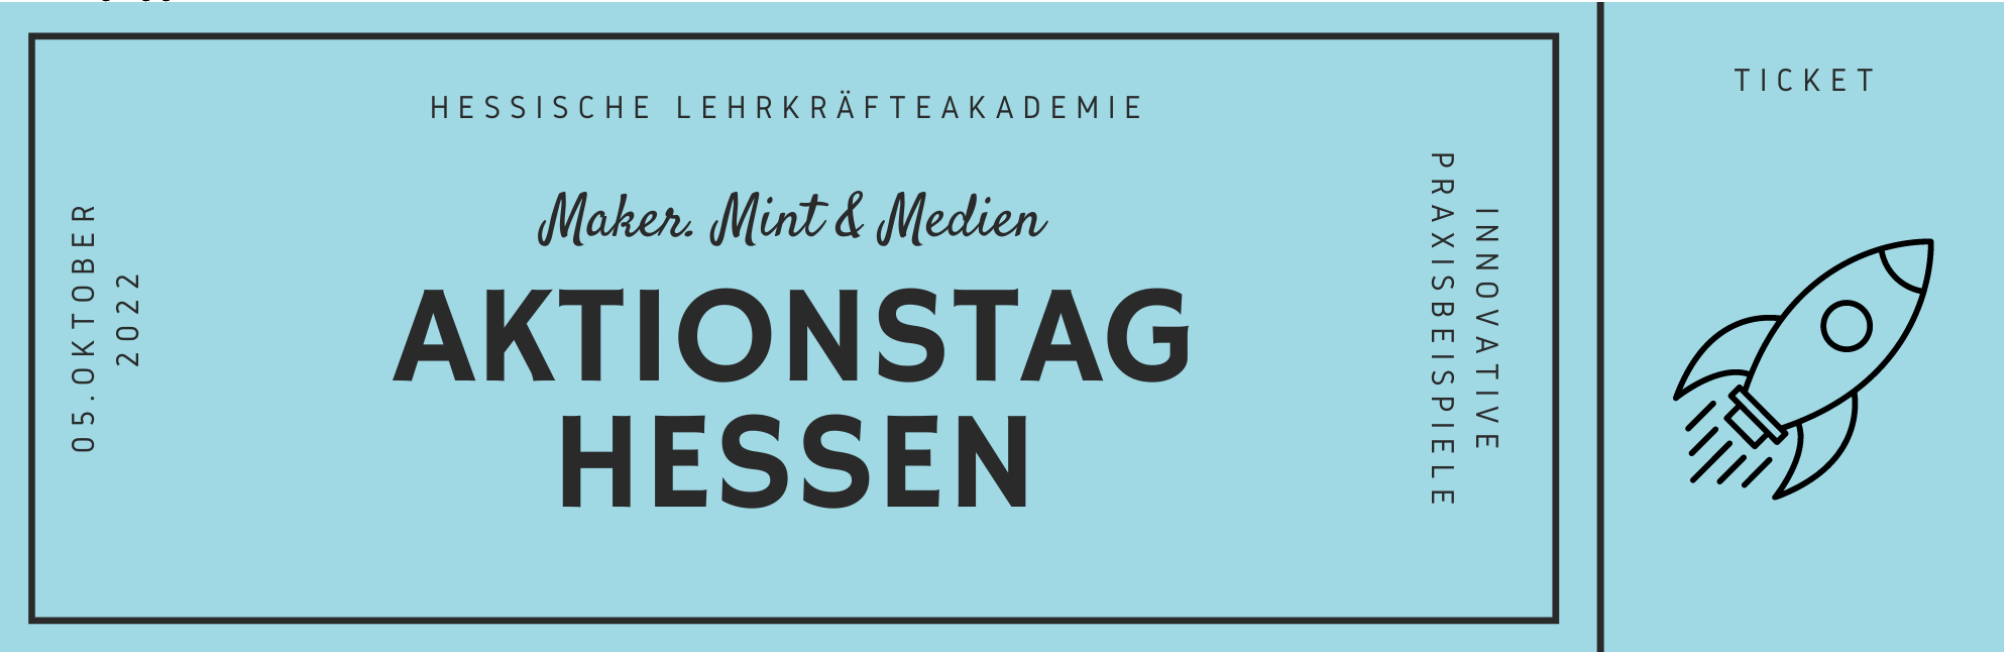 Aktionstag Hessen - Maker, Mint & Medien